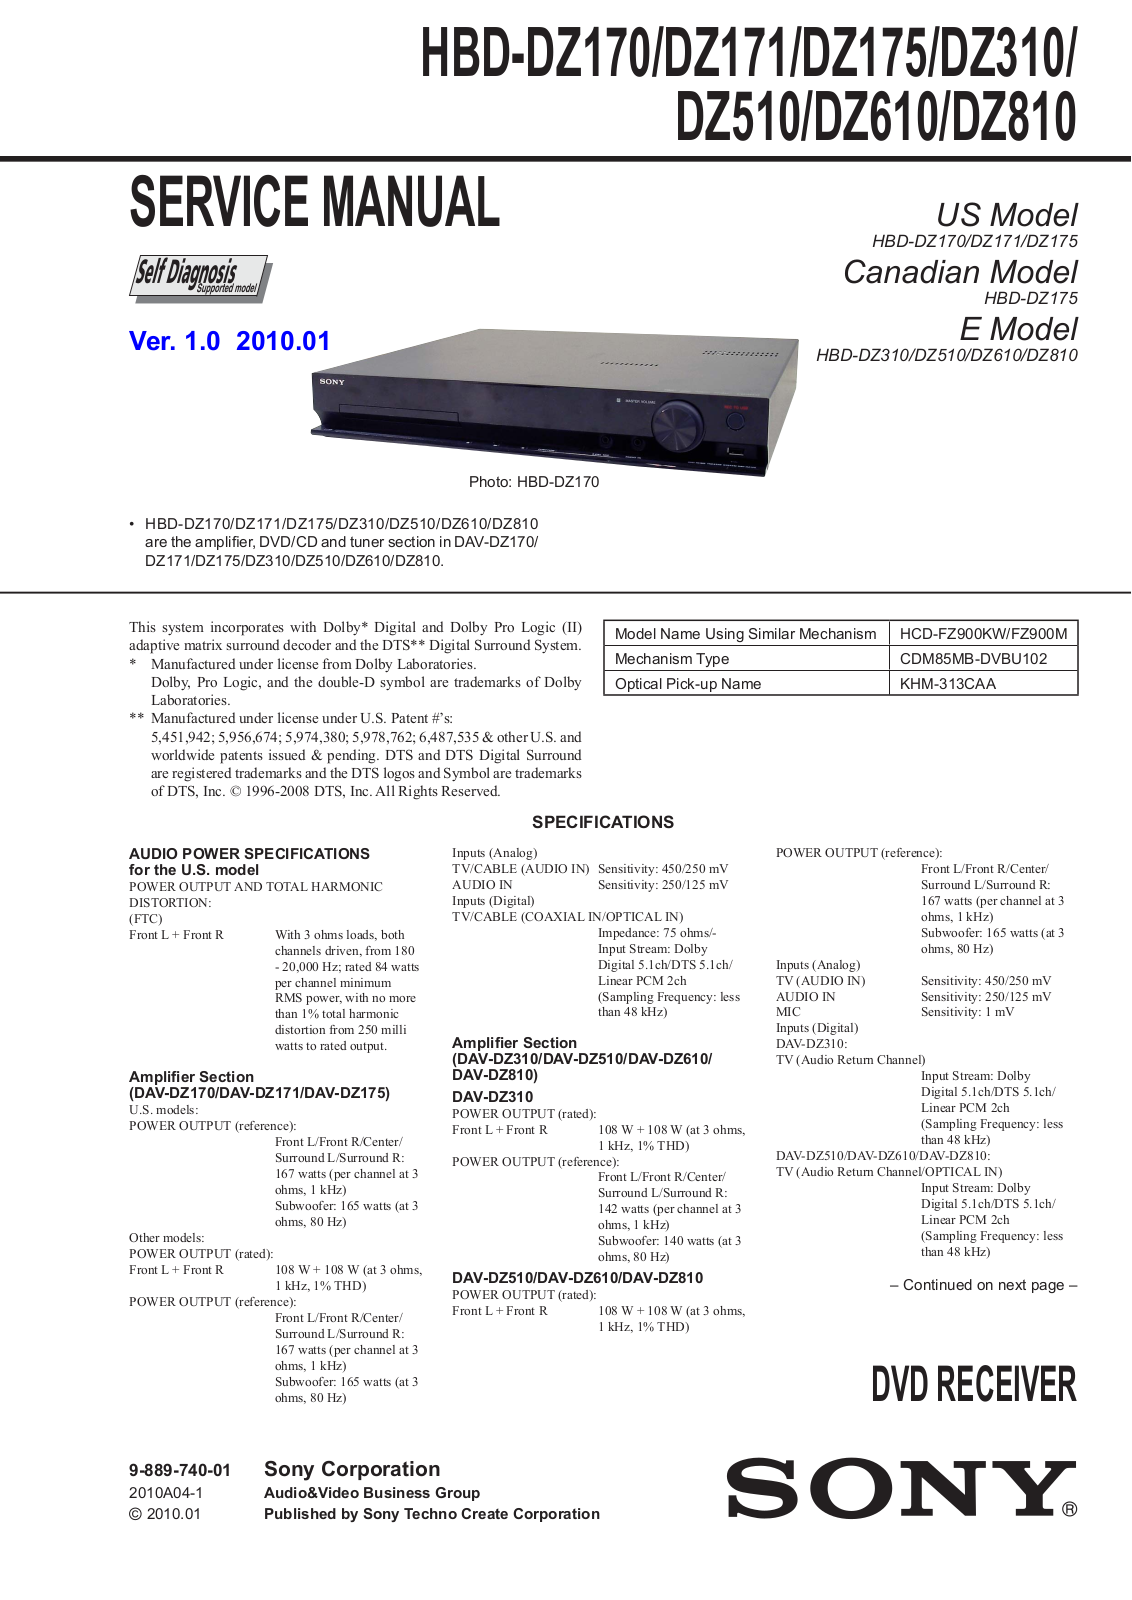 Sony HBD-DZ170, HBD-DZ171, HBD-DZ175, HBD-DZ310, HBD-DZ510 Service Manual